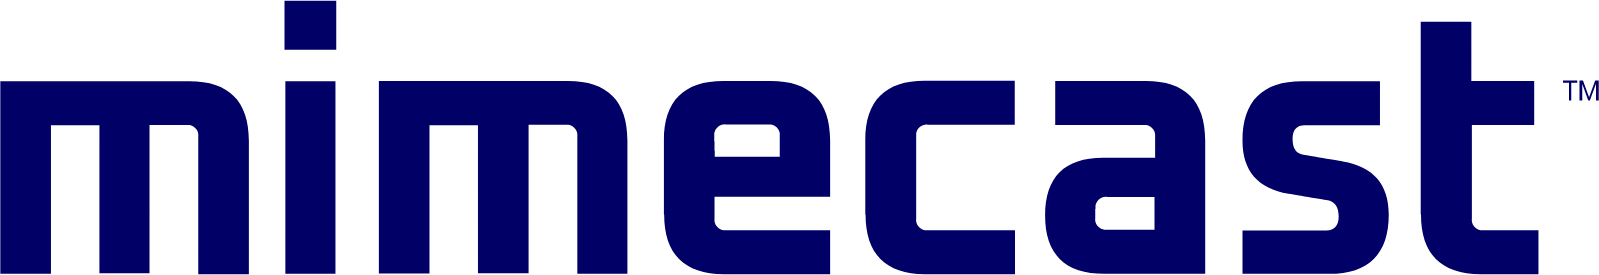 Mimecast logo large (transparent PNG)